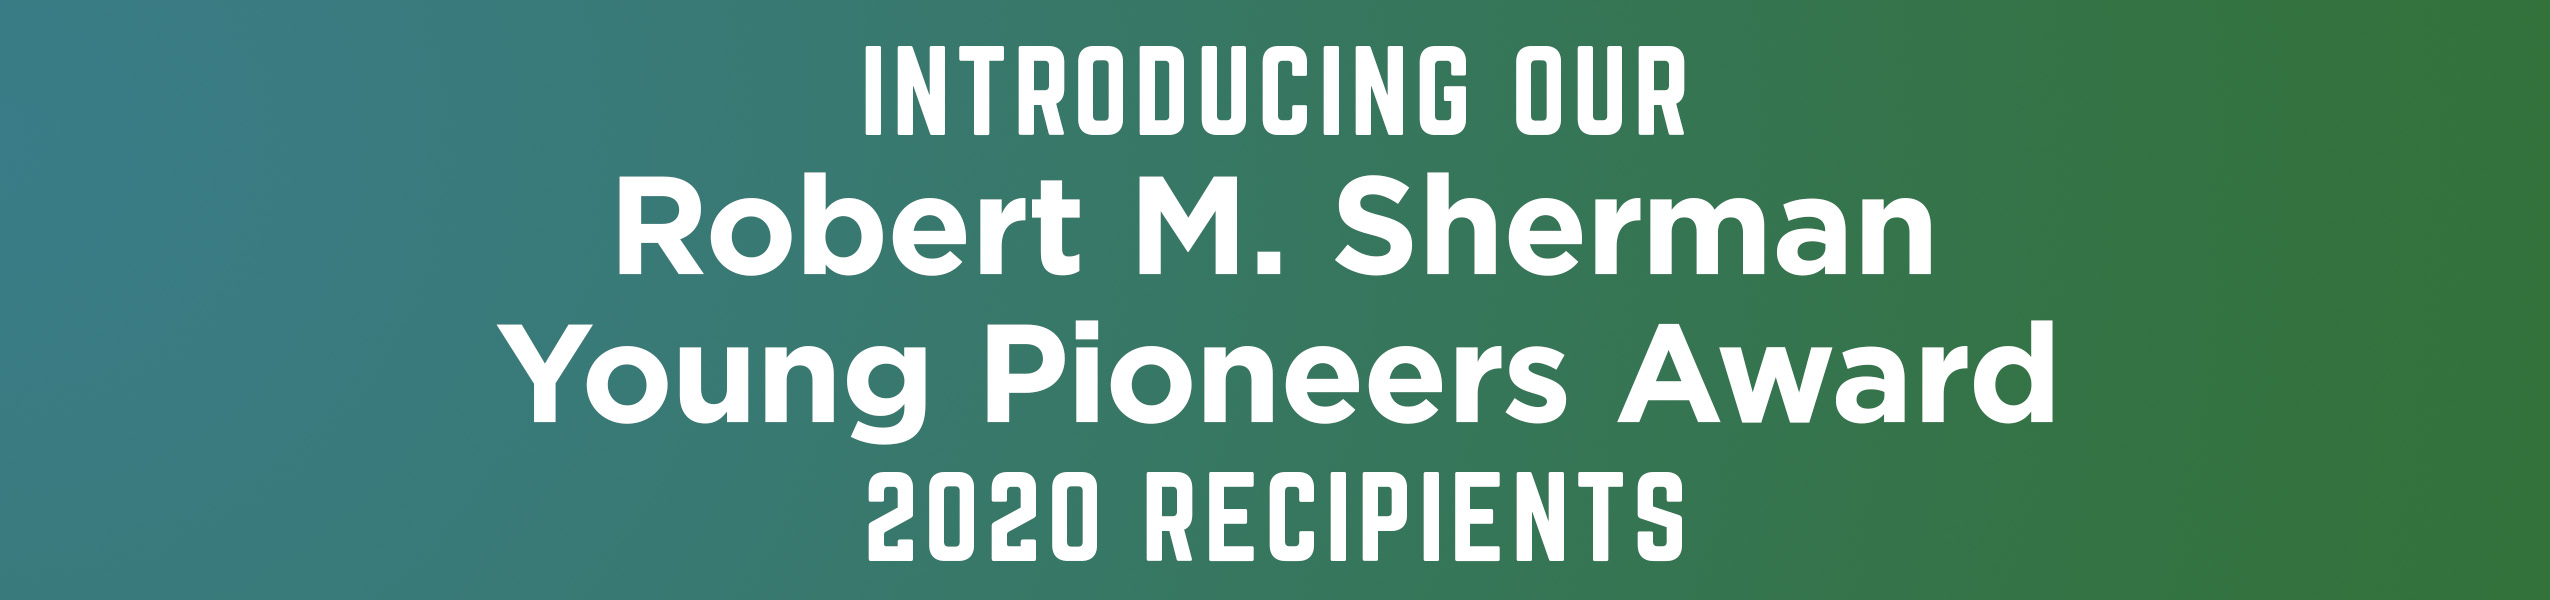 Introducing Robert M. Sherman Young Pioneers Award 2020 Recipients